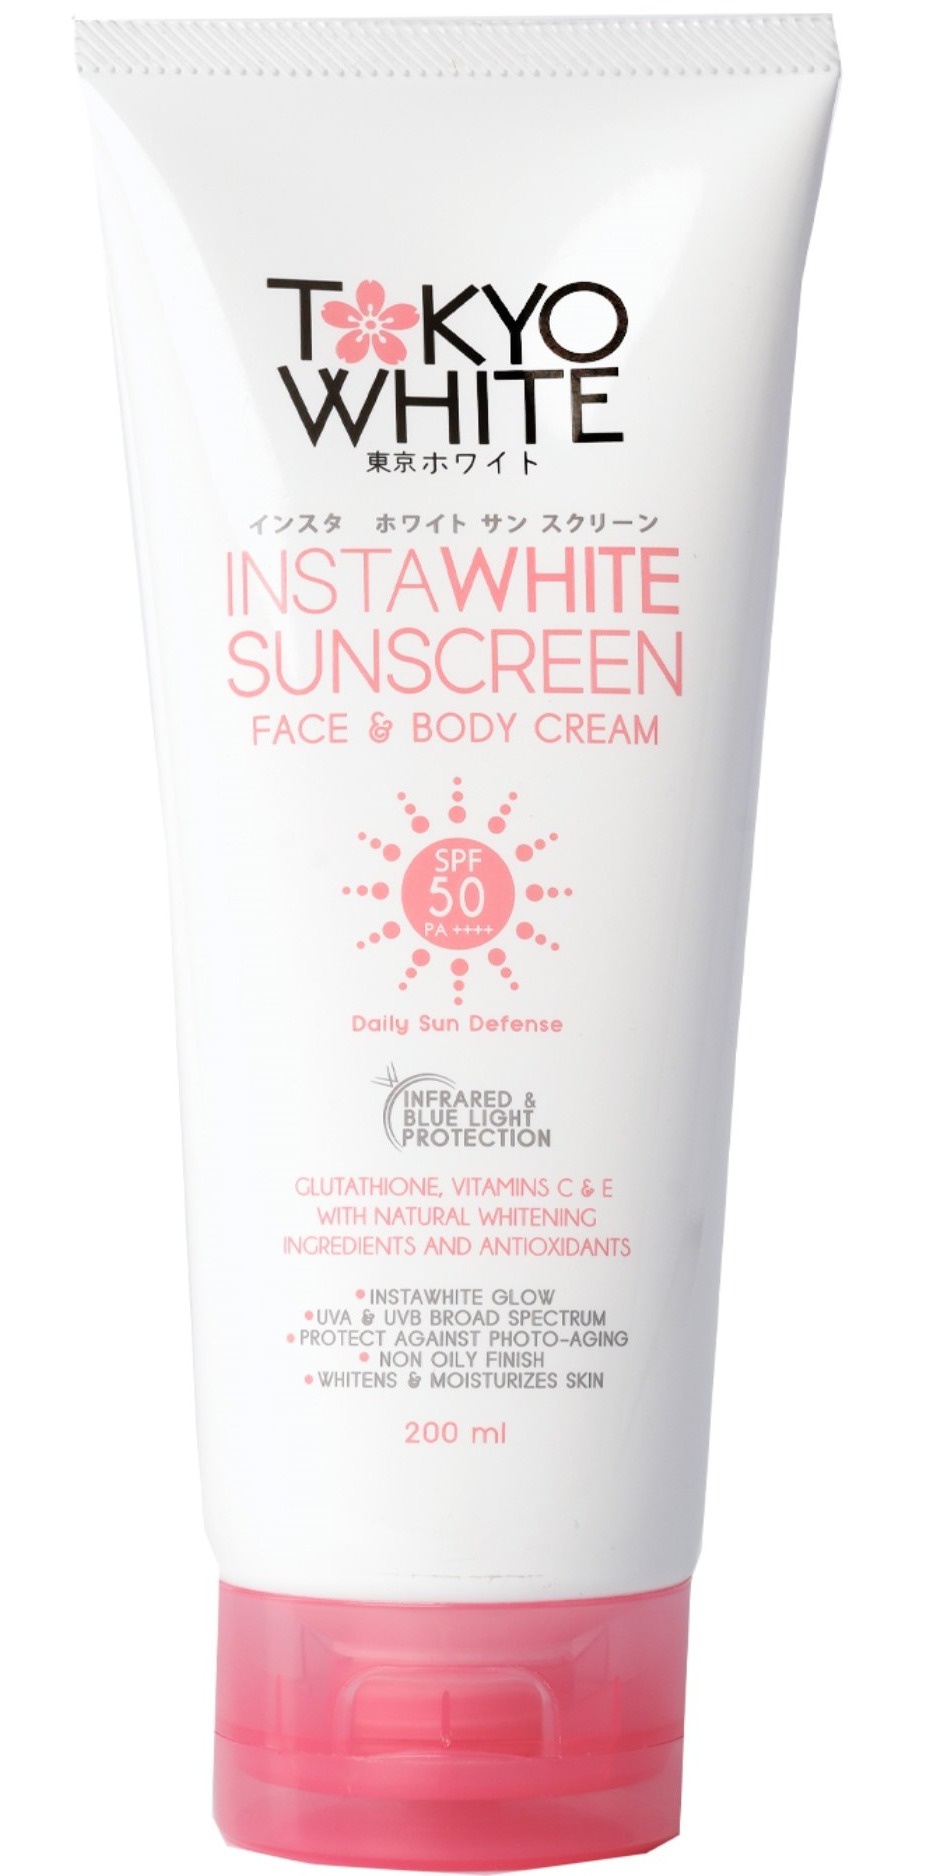 TOKYO WHITE Instawhite Sunscreen Face And Body Cream SPF 50 Pa++++